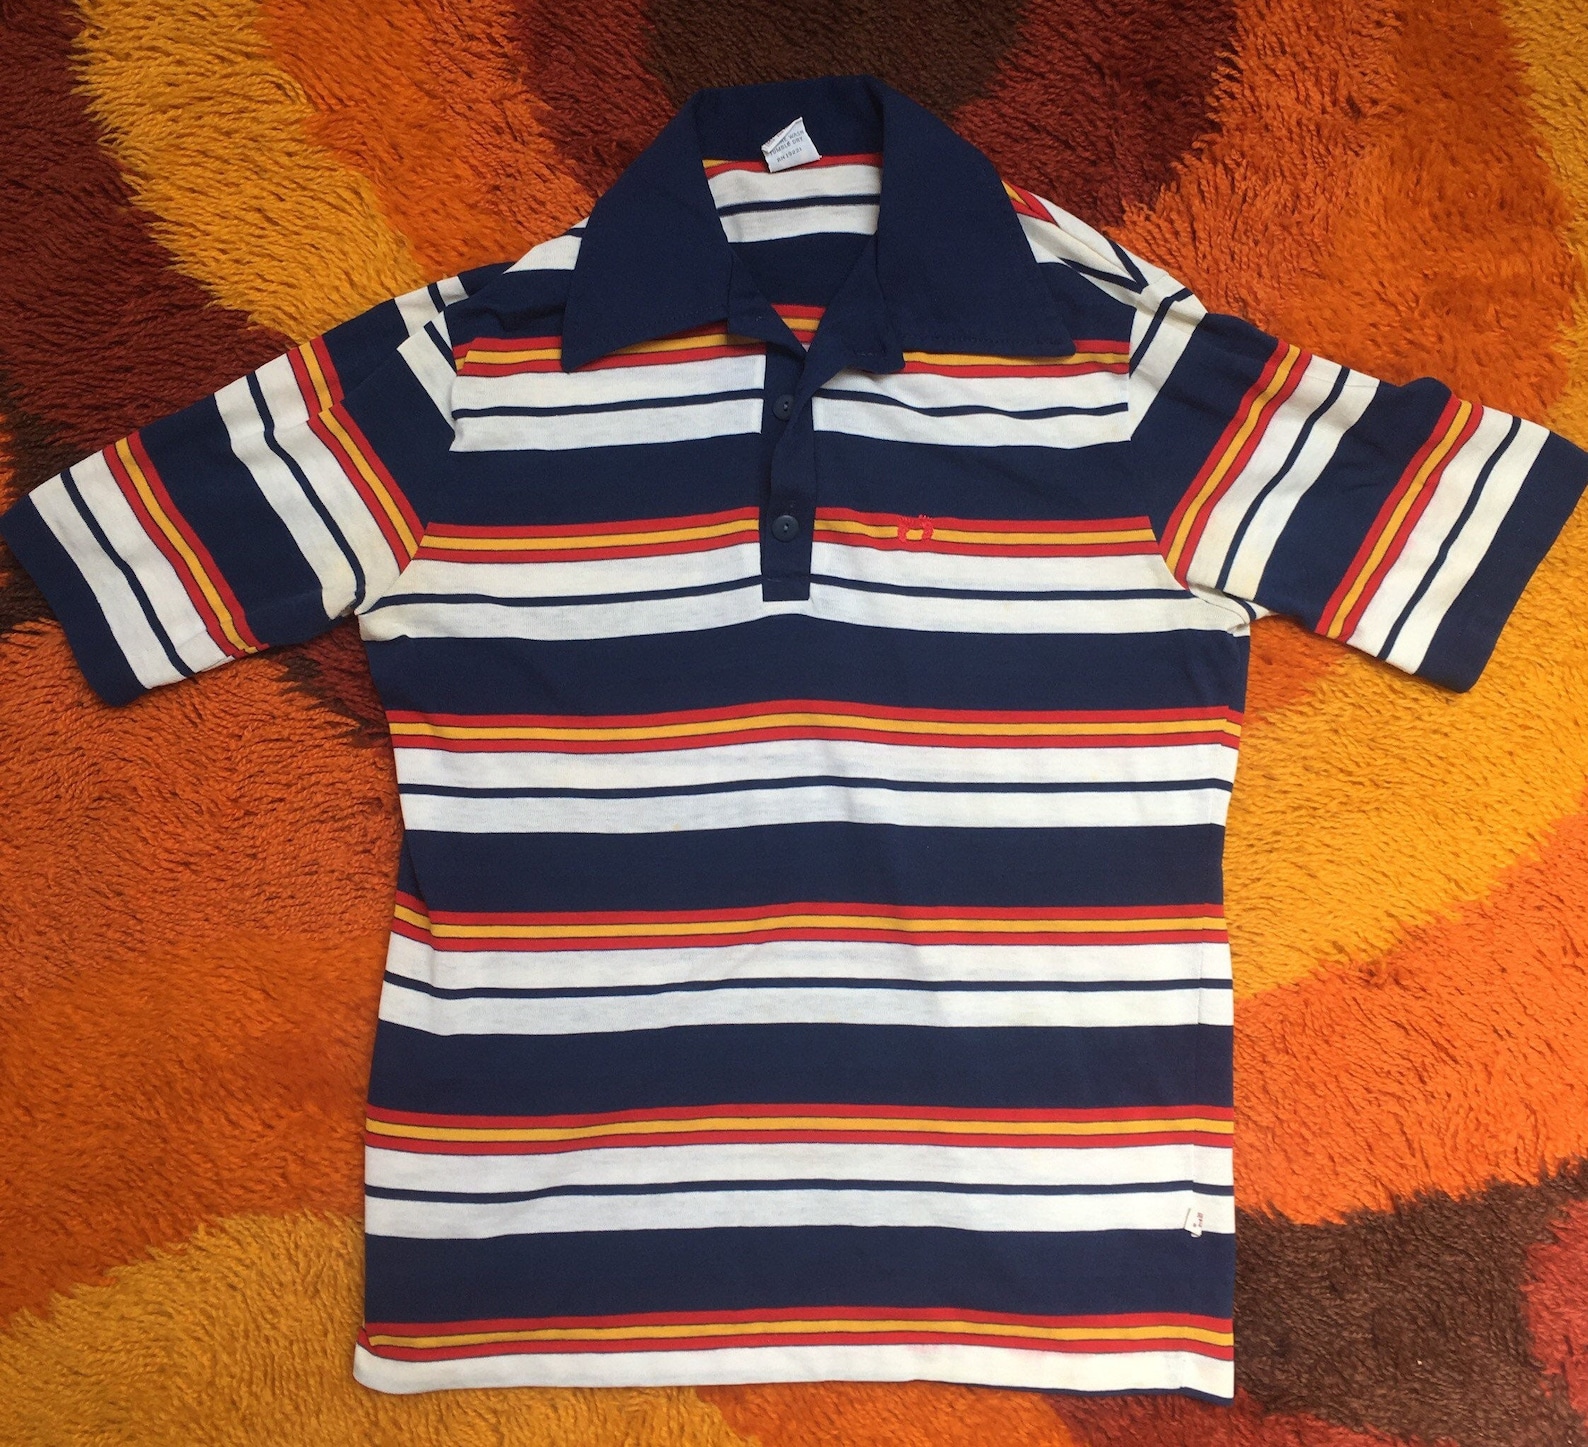 Hang Ten vintage striped 70s retro shirt | Etsy